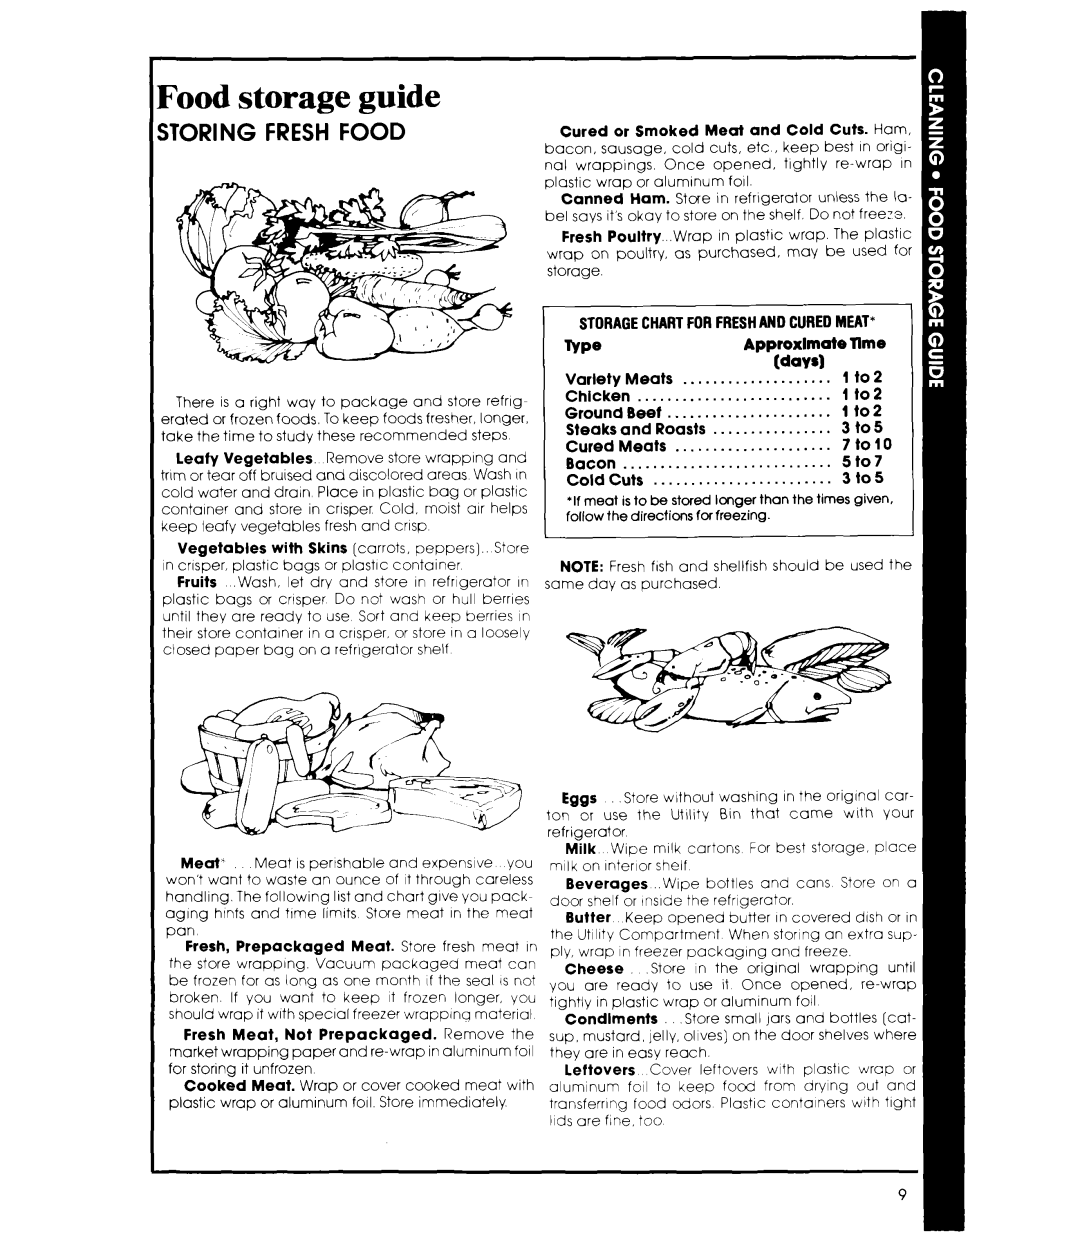 Whirlpool ET12AK manual Food storage guide, Storing Fresh Food, Storagechartforfreshandcuredmeat, Approxlmate, days 